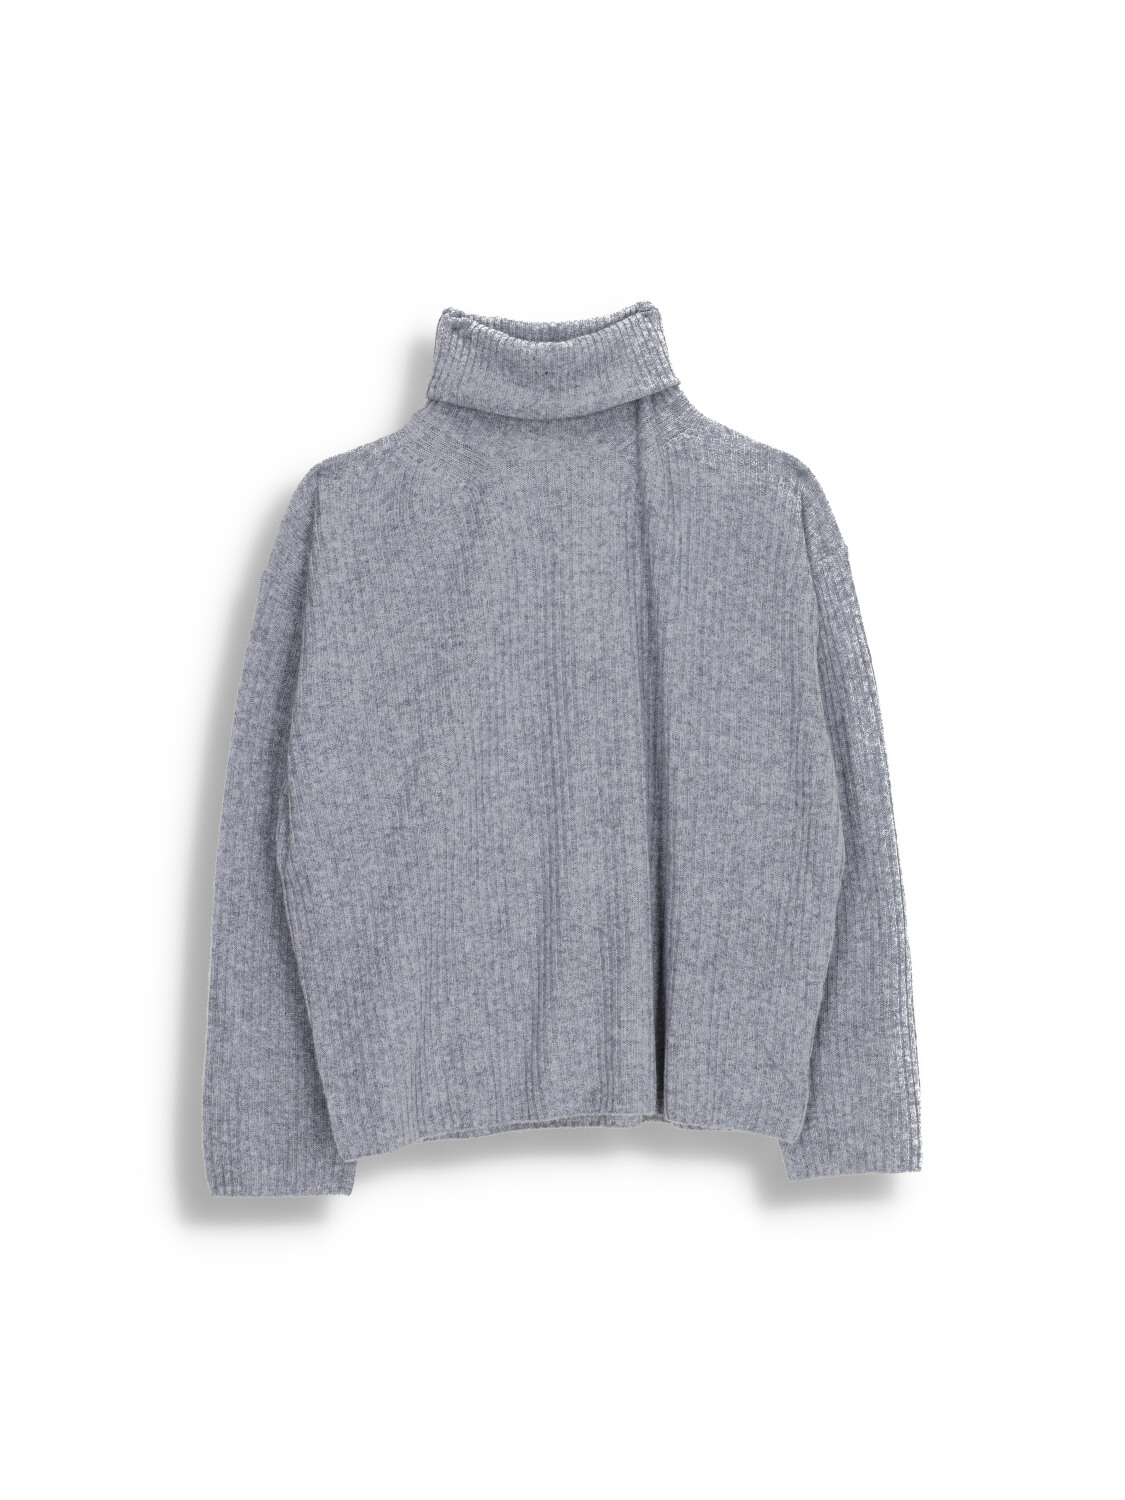 Turtleneck Britt - wool turtleneck sweater